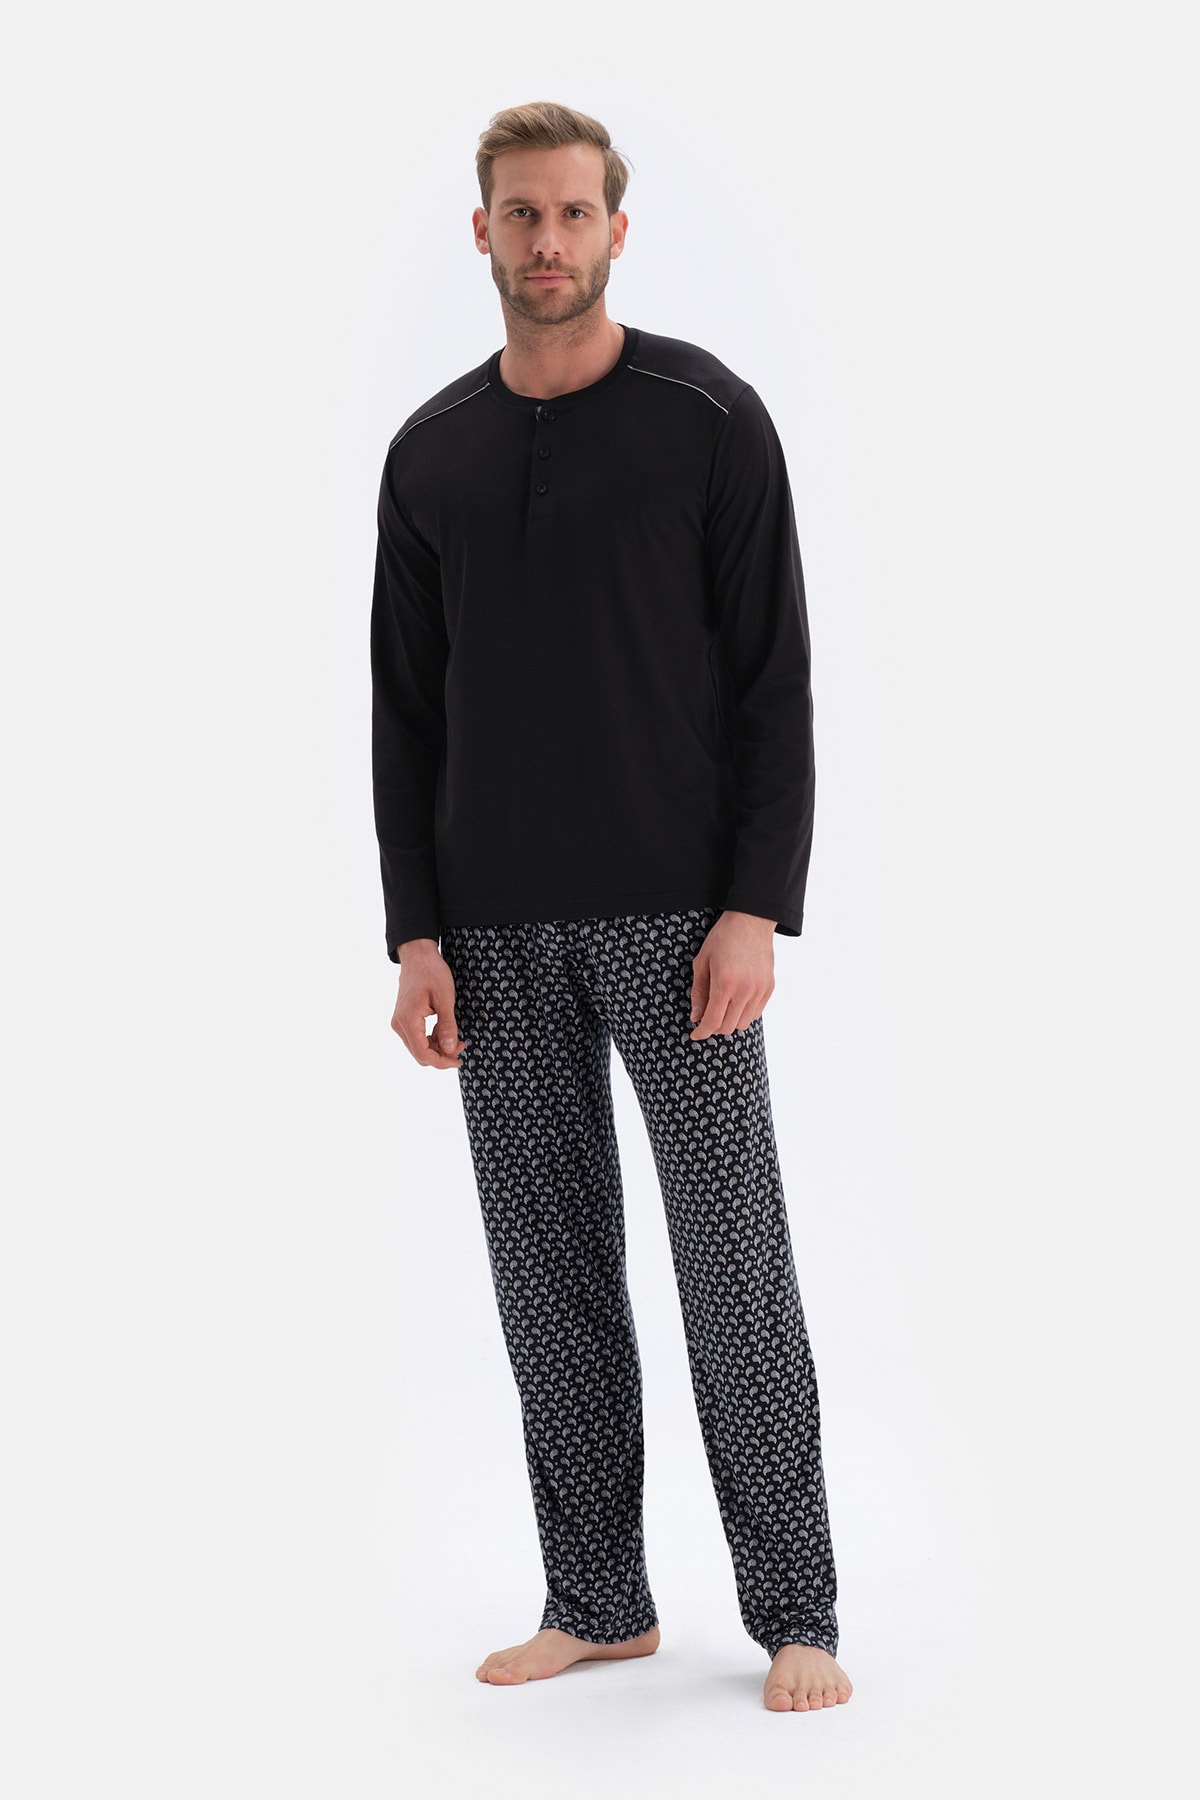 Levně Dagi Black Long Sleeve Top Size Printed Bottom Modal Groom Pajamas Set